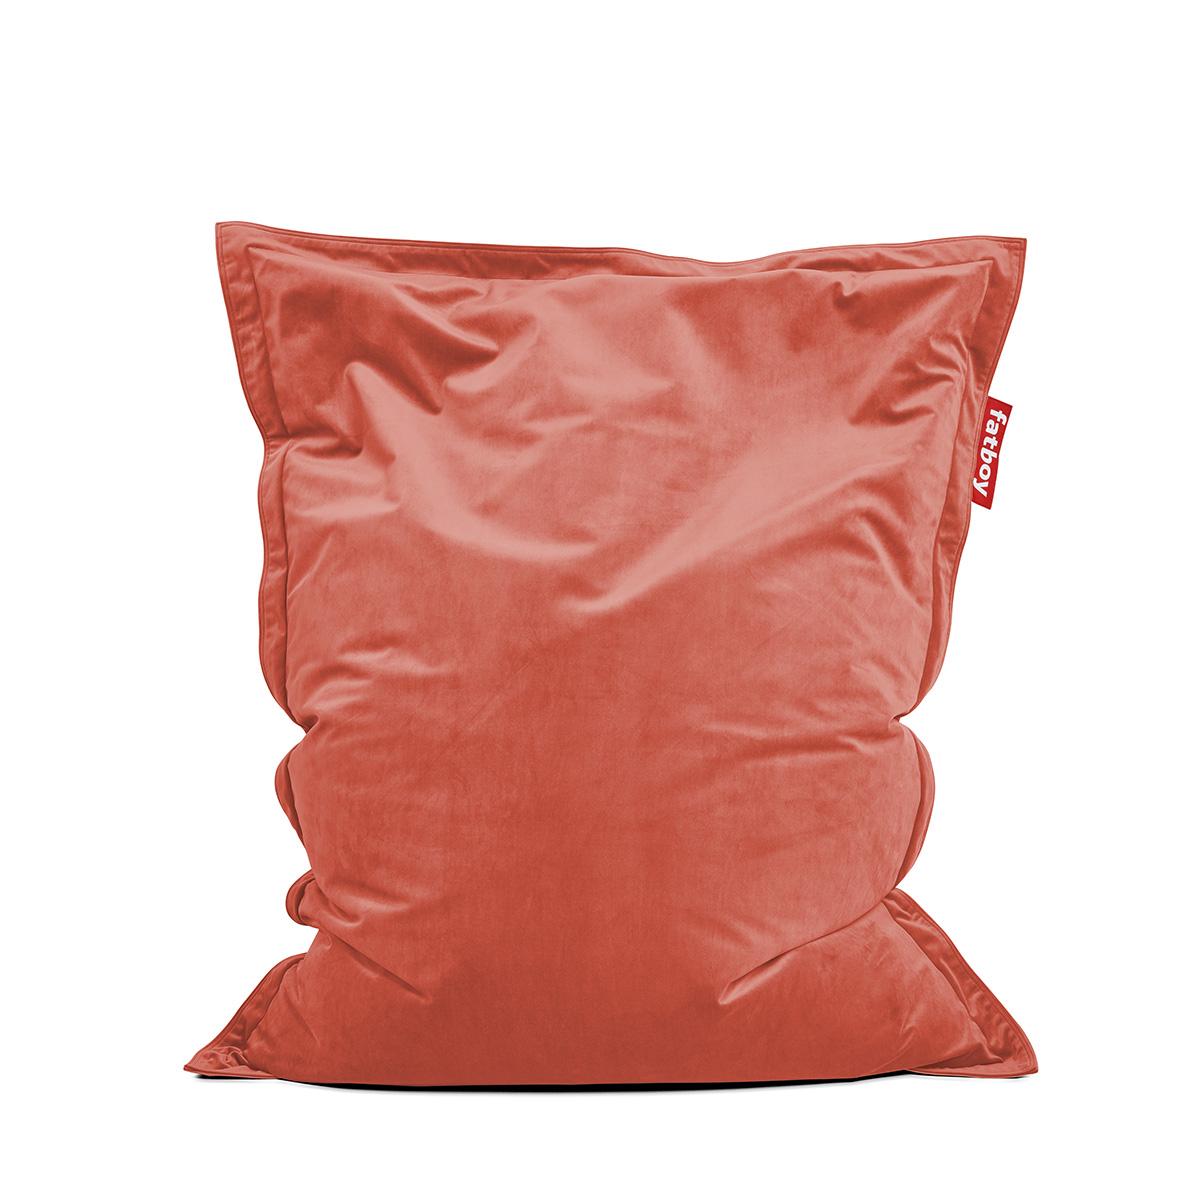 FATBOY FATBOY Lazy bag crveni